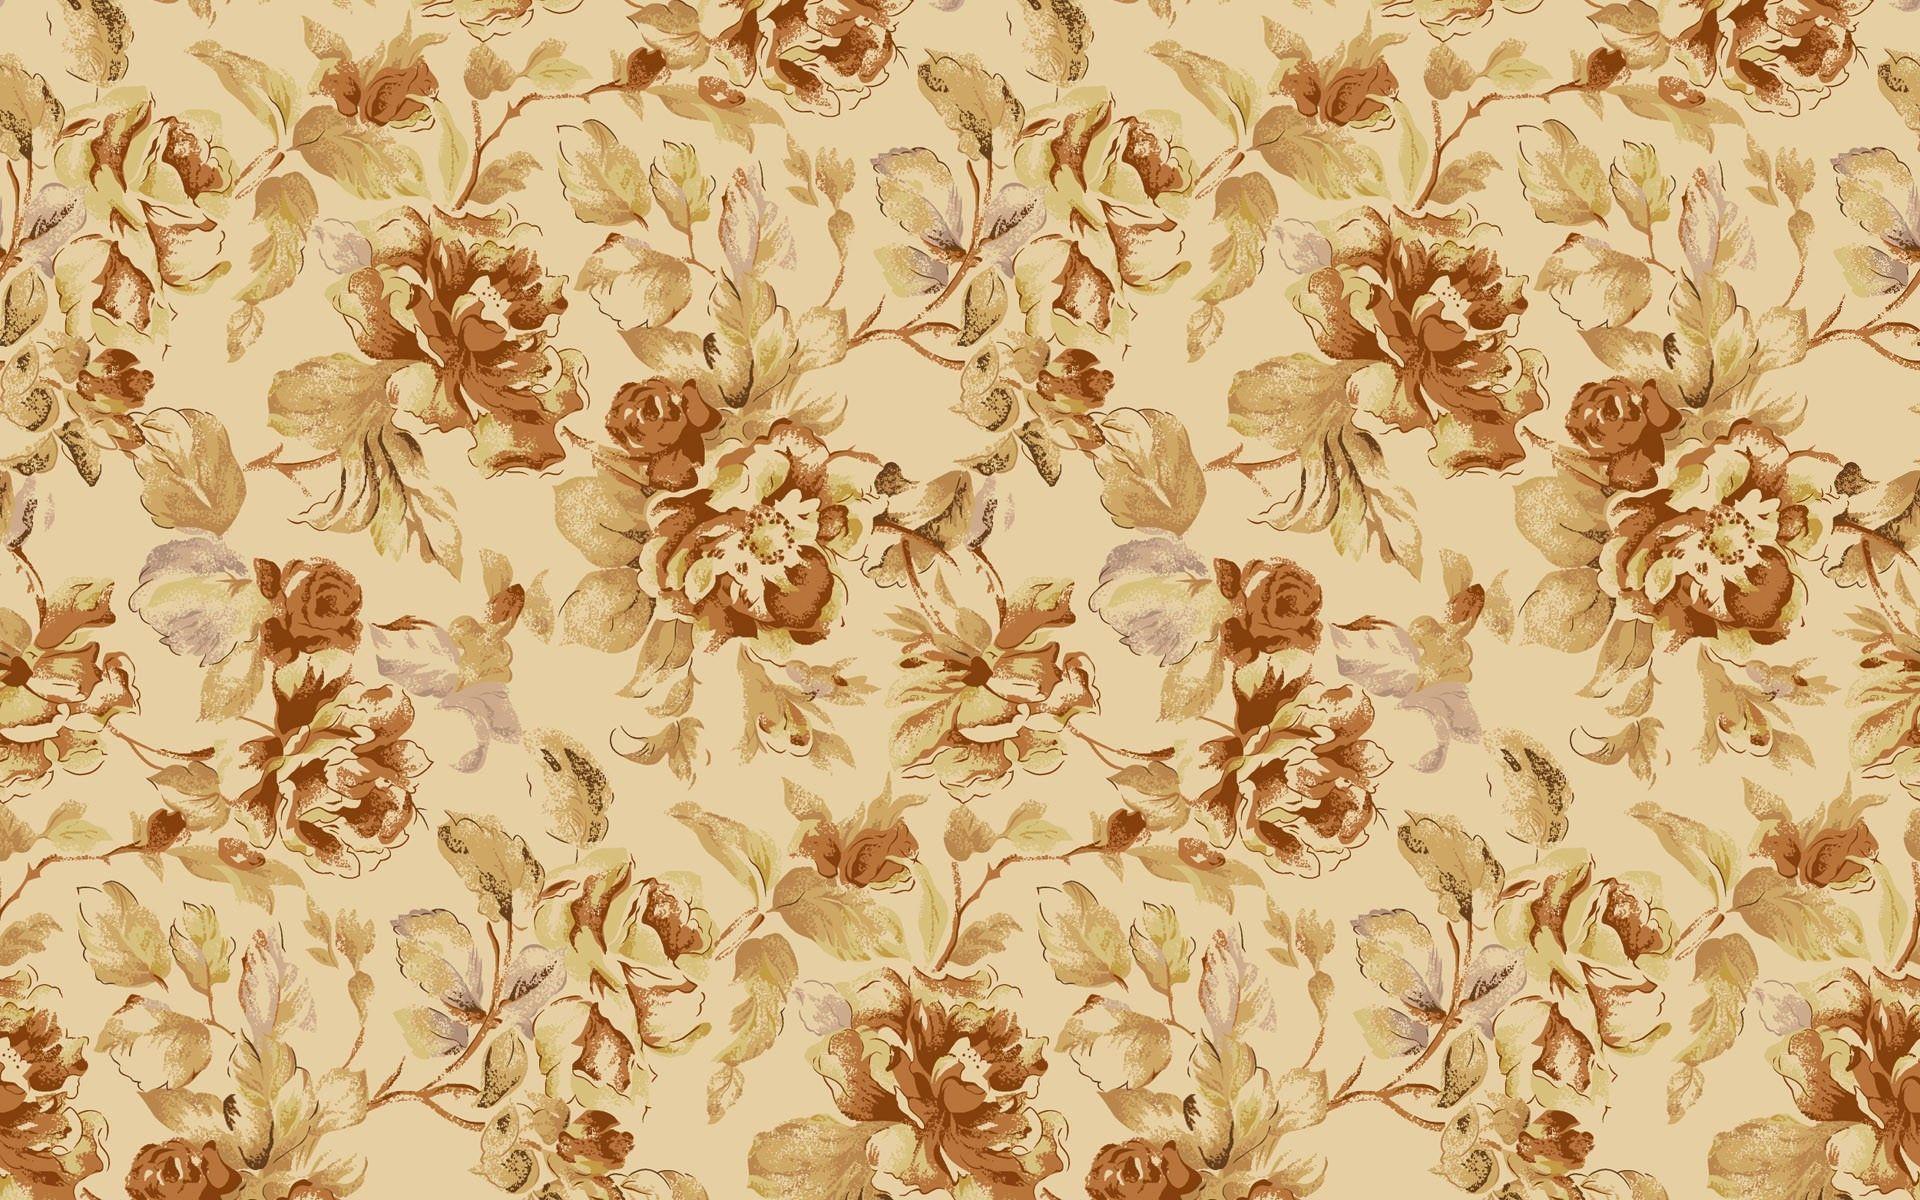 Floral pattern Wallpaper 12 X 1200. Imgnooz.com